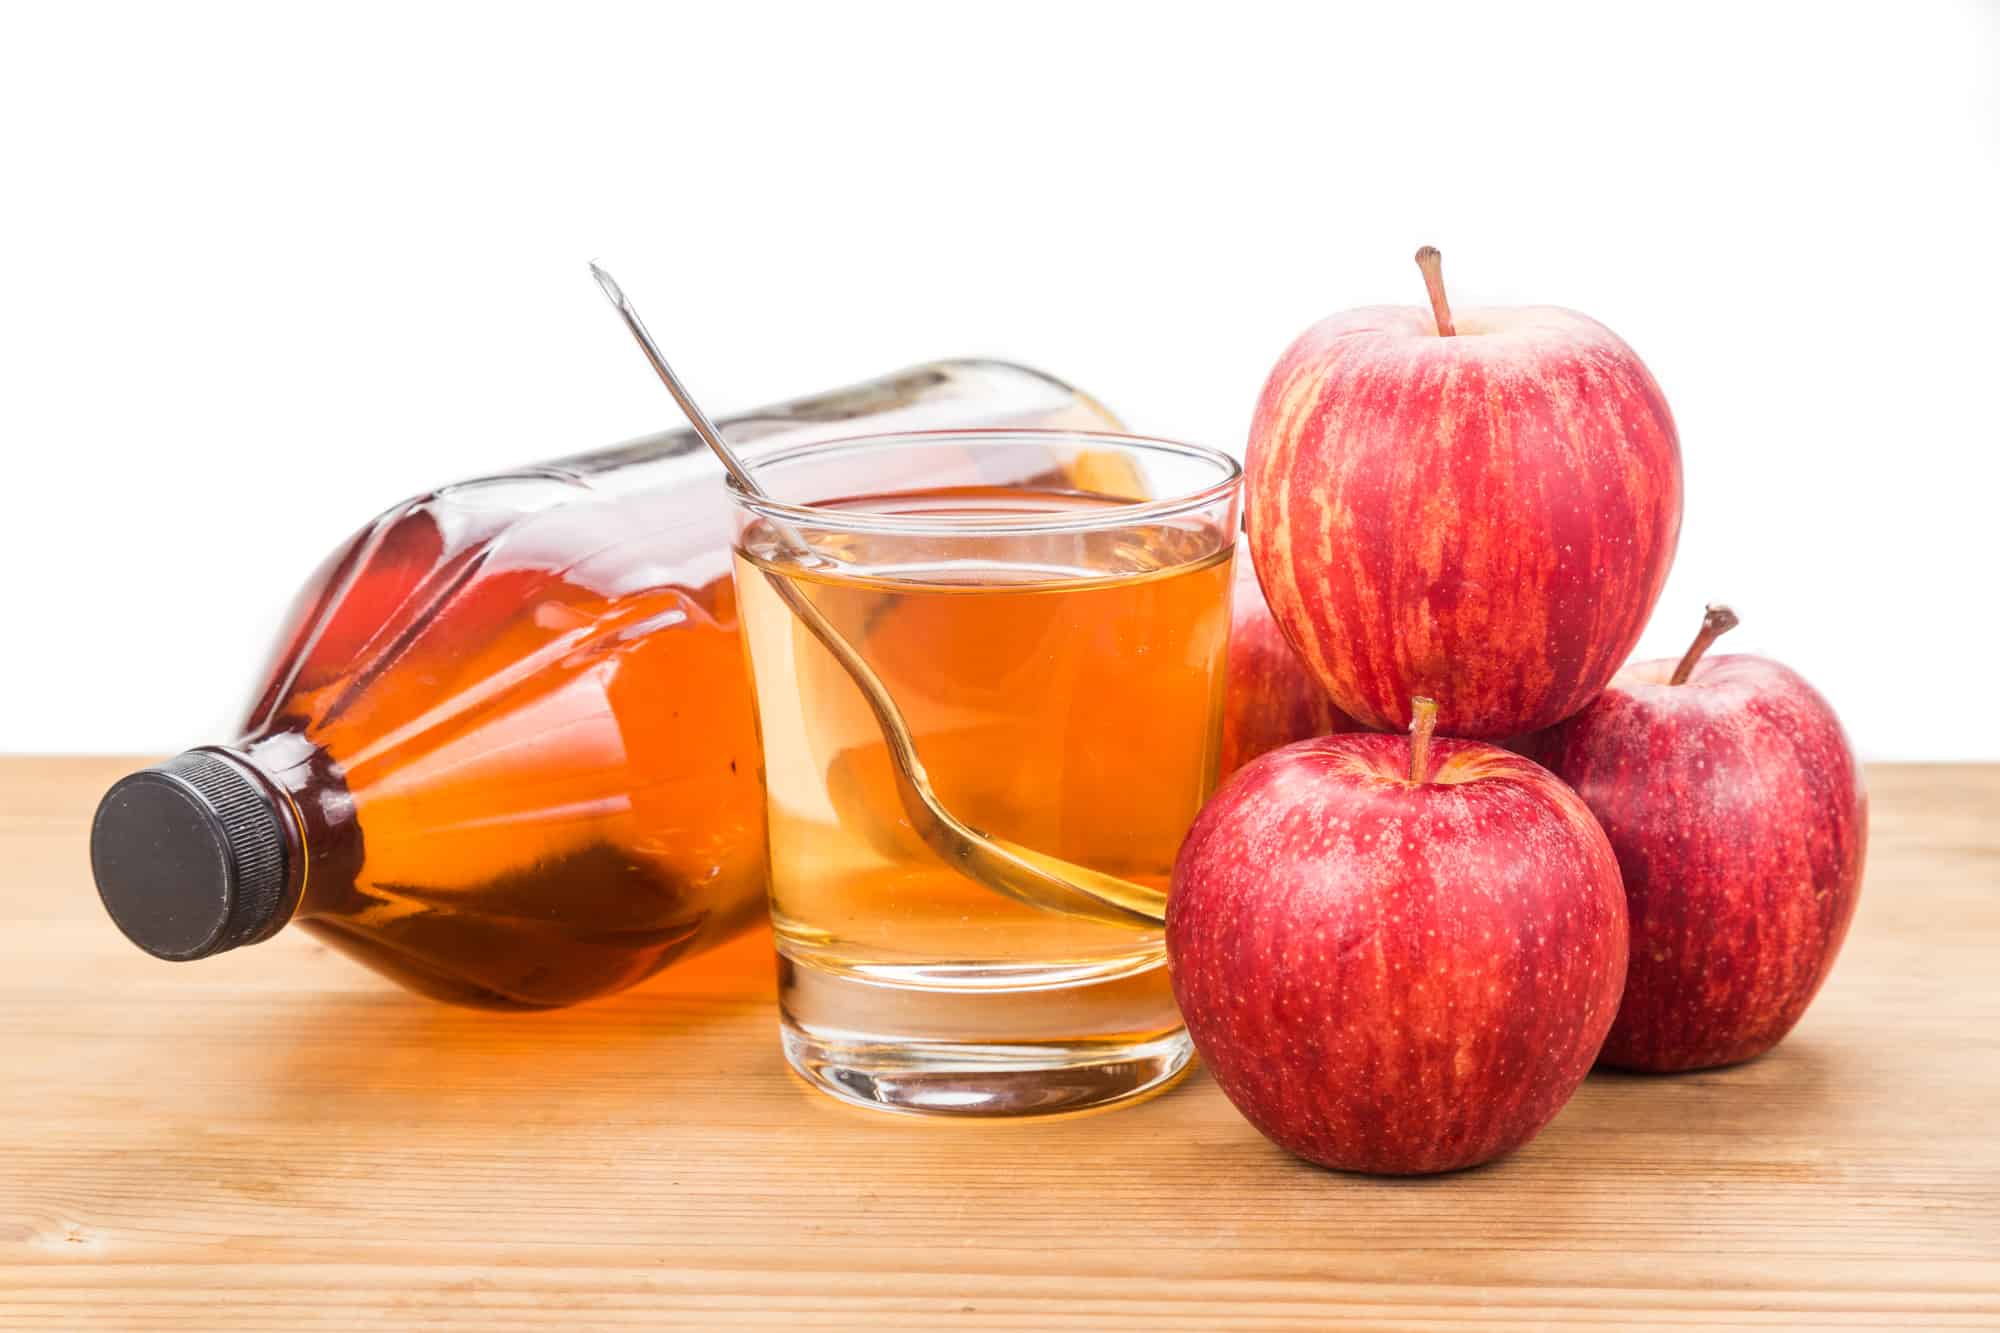 Apple cider vinegar in jar, glass and fresh apple, healthy drink.